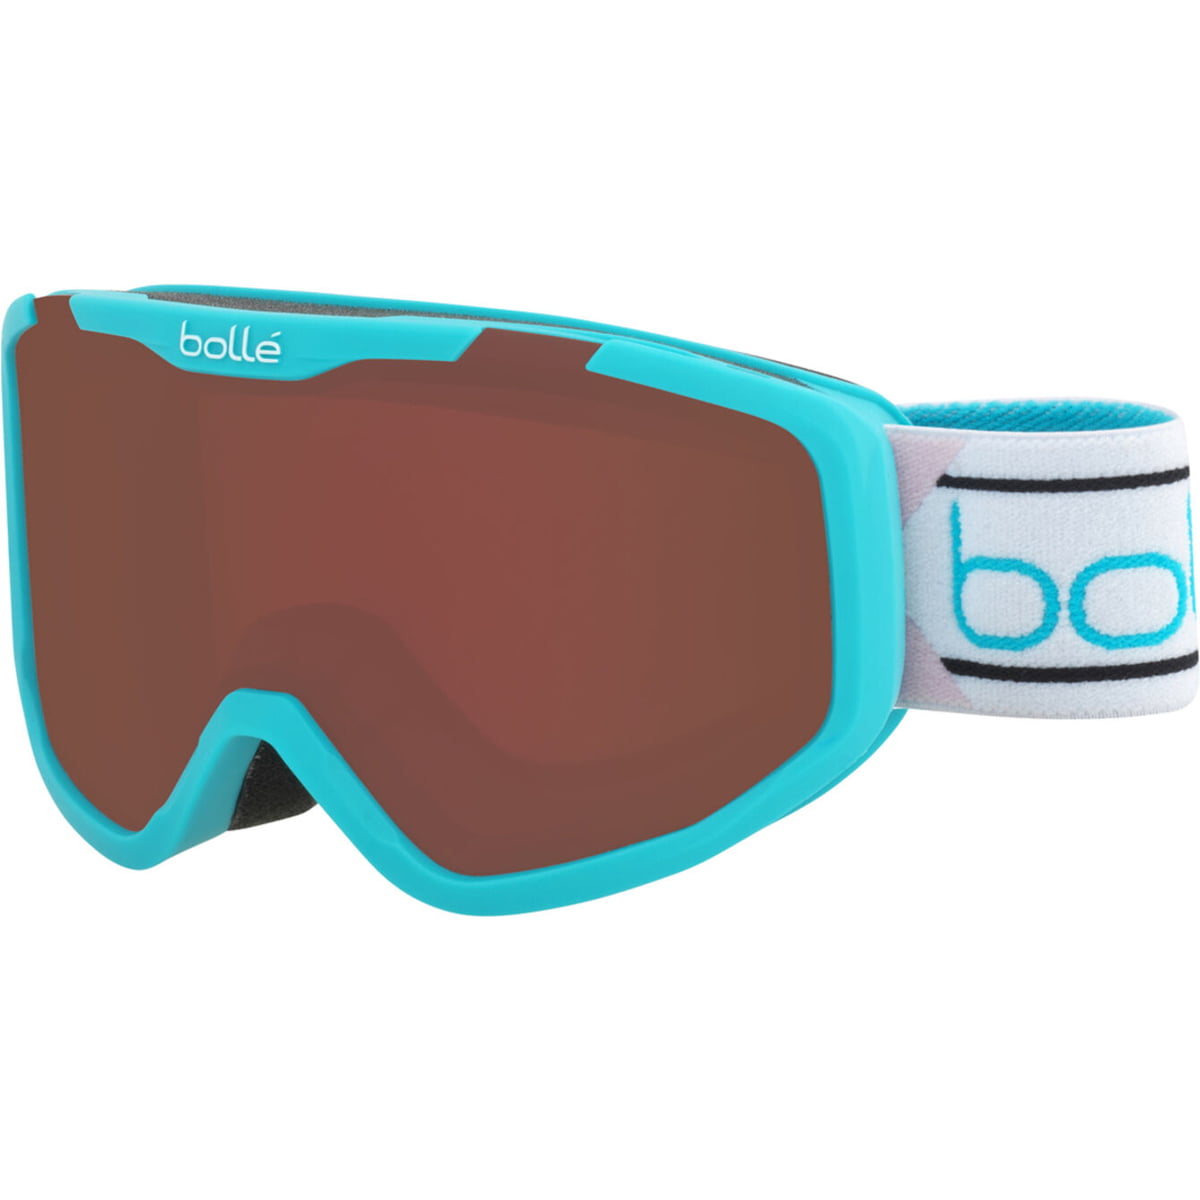 bollé Explorer OTG Snow Goggles Matte Pink Unisex-Baby Small